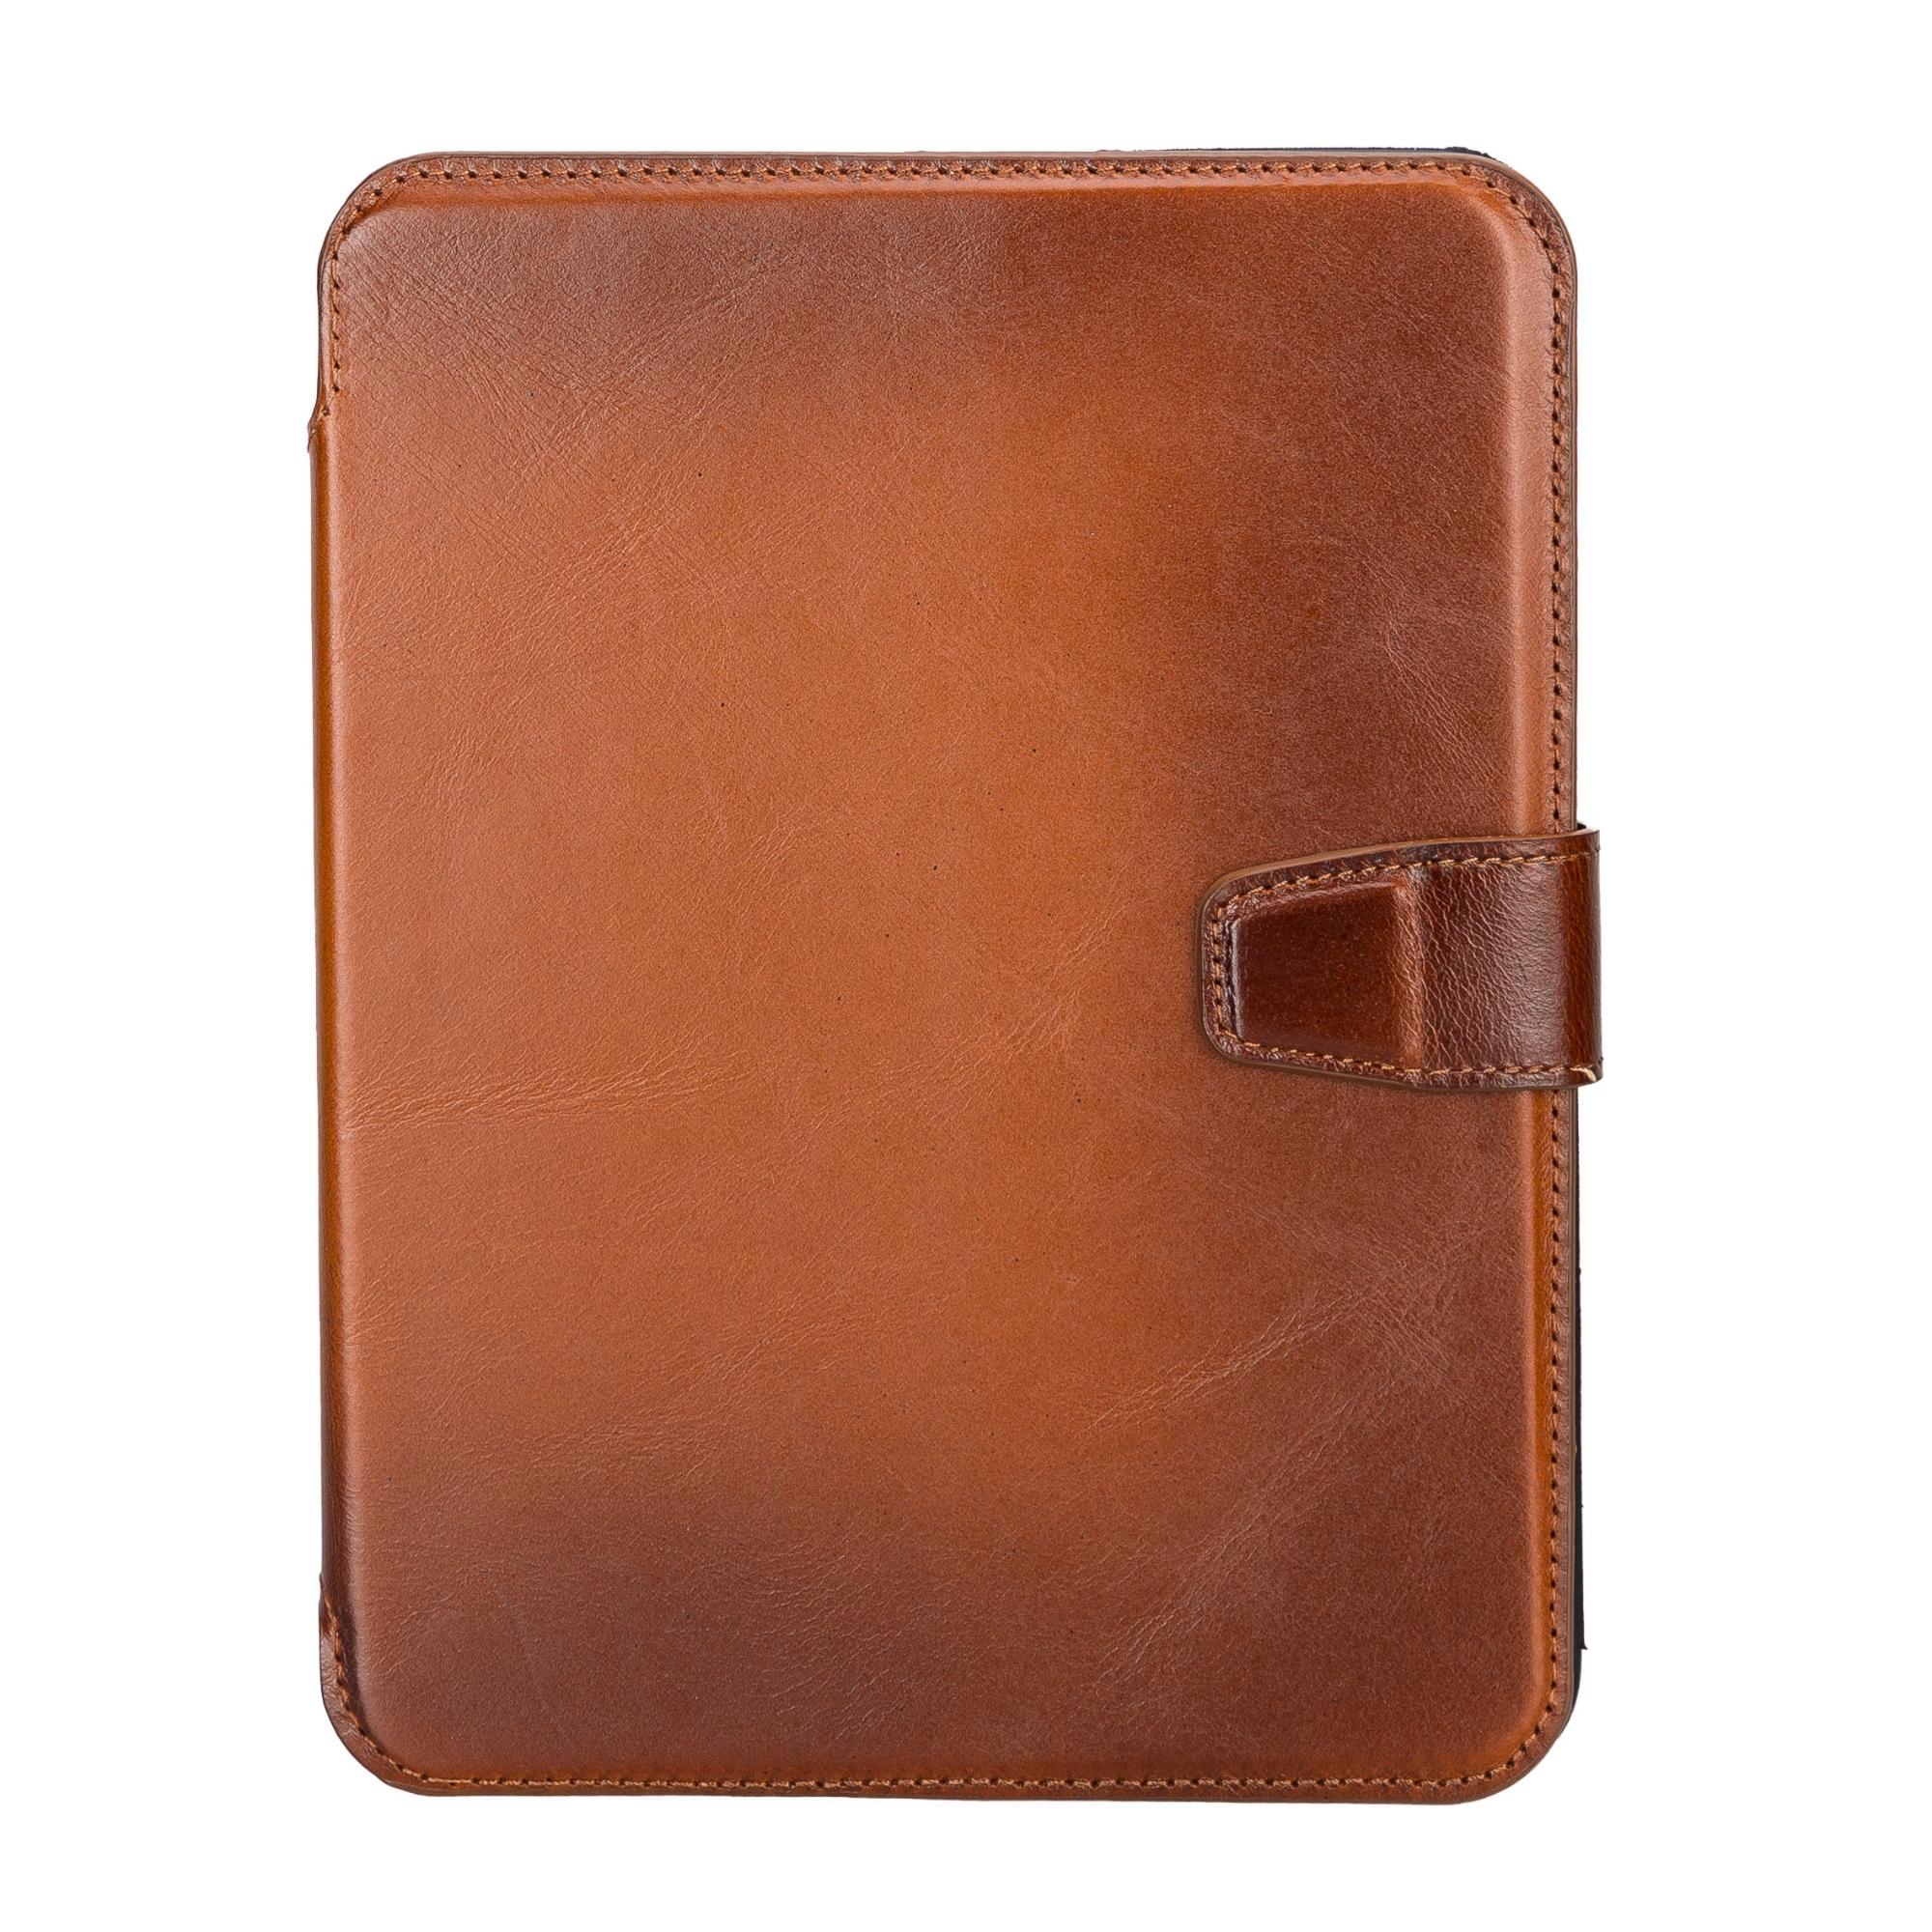 Manhattan Leather Wallet Case for iPad Mini 7.9-inch - Tan - 5th Generation - TORONATA